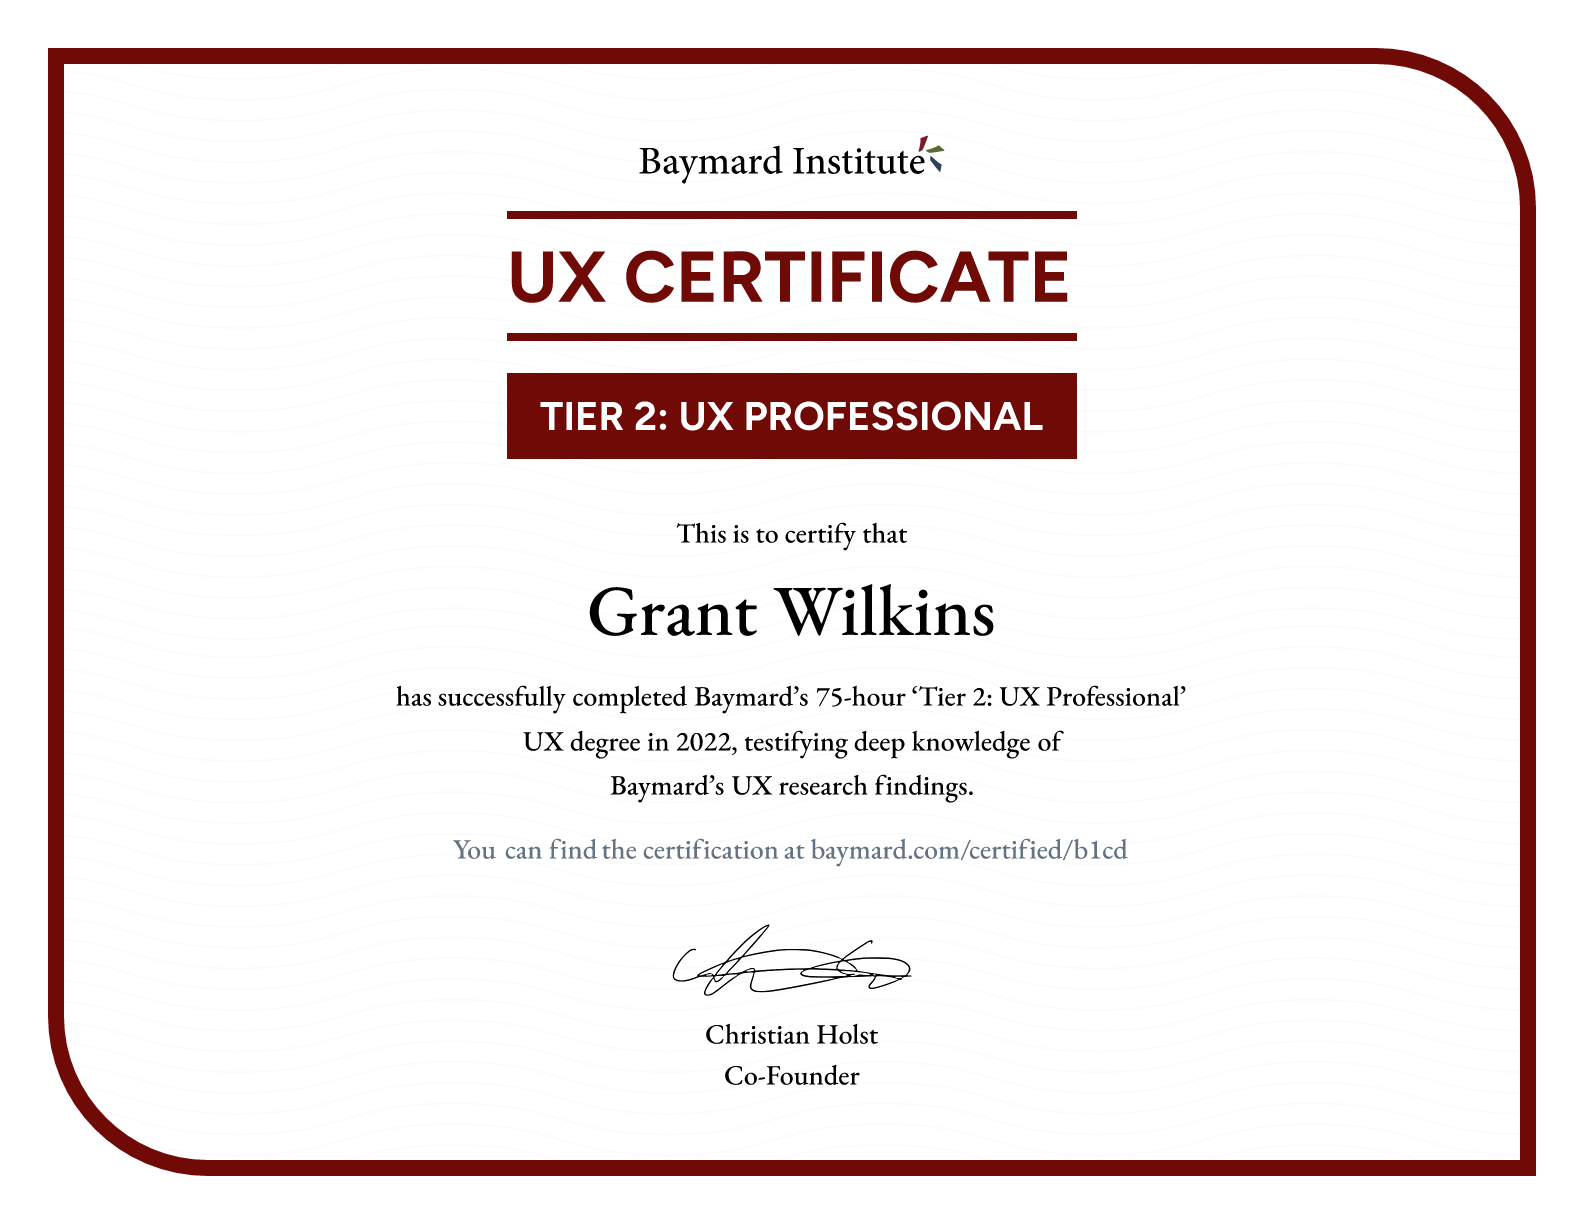 Grant Wilkins’s certificate